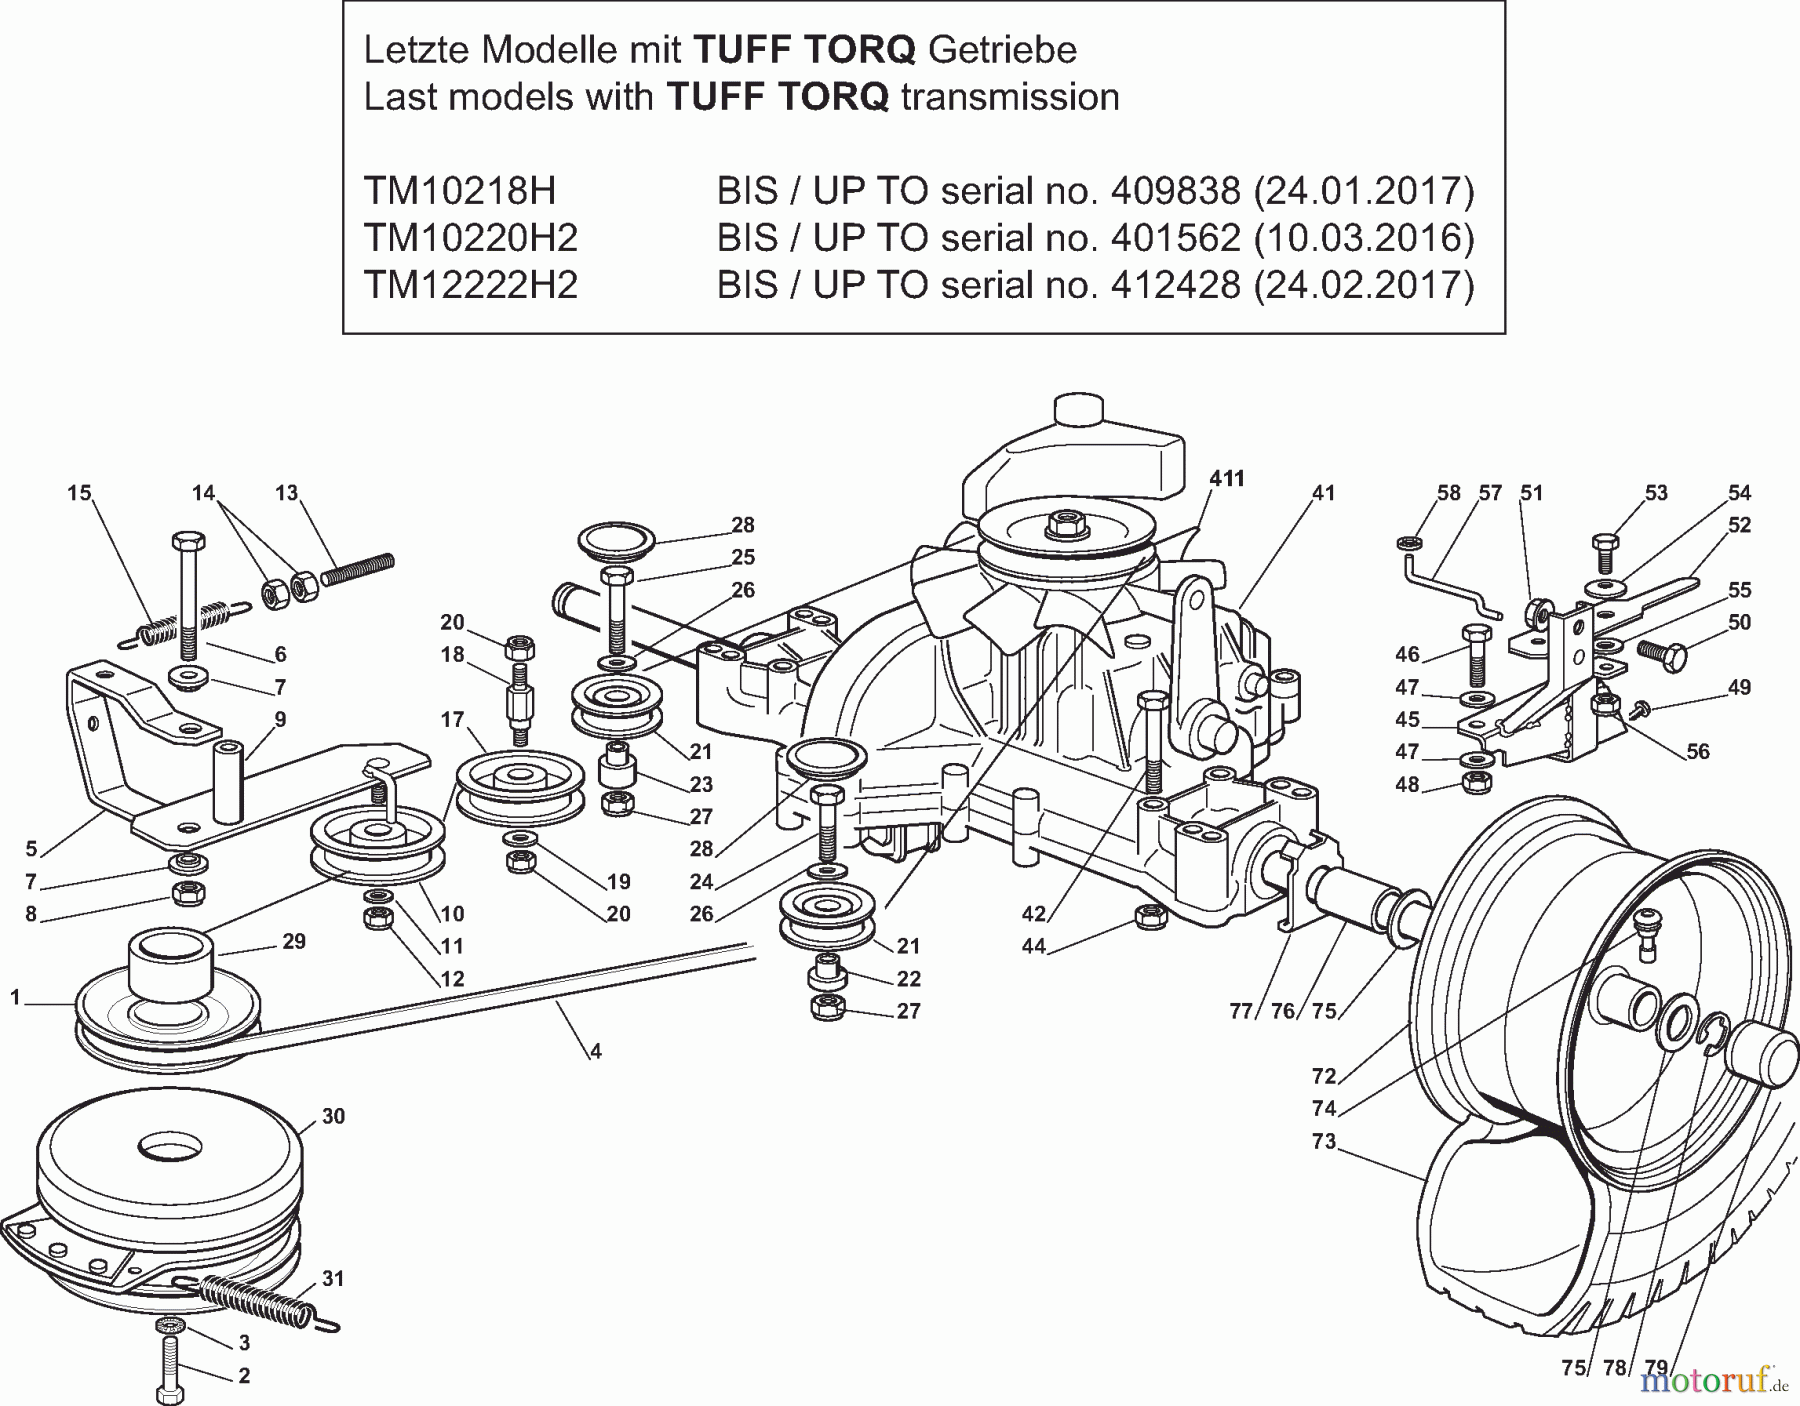  Dolmar Rasentraktoren TM12222H2 TM-122.22 H2 (2013-2014) 6y  Getriebe